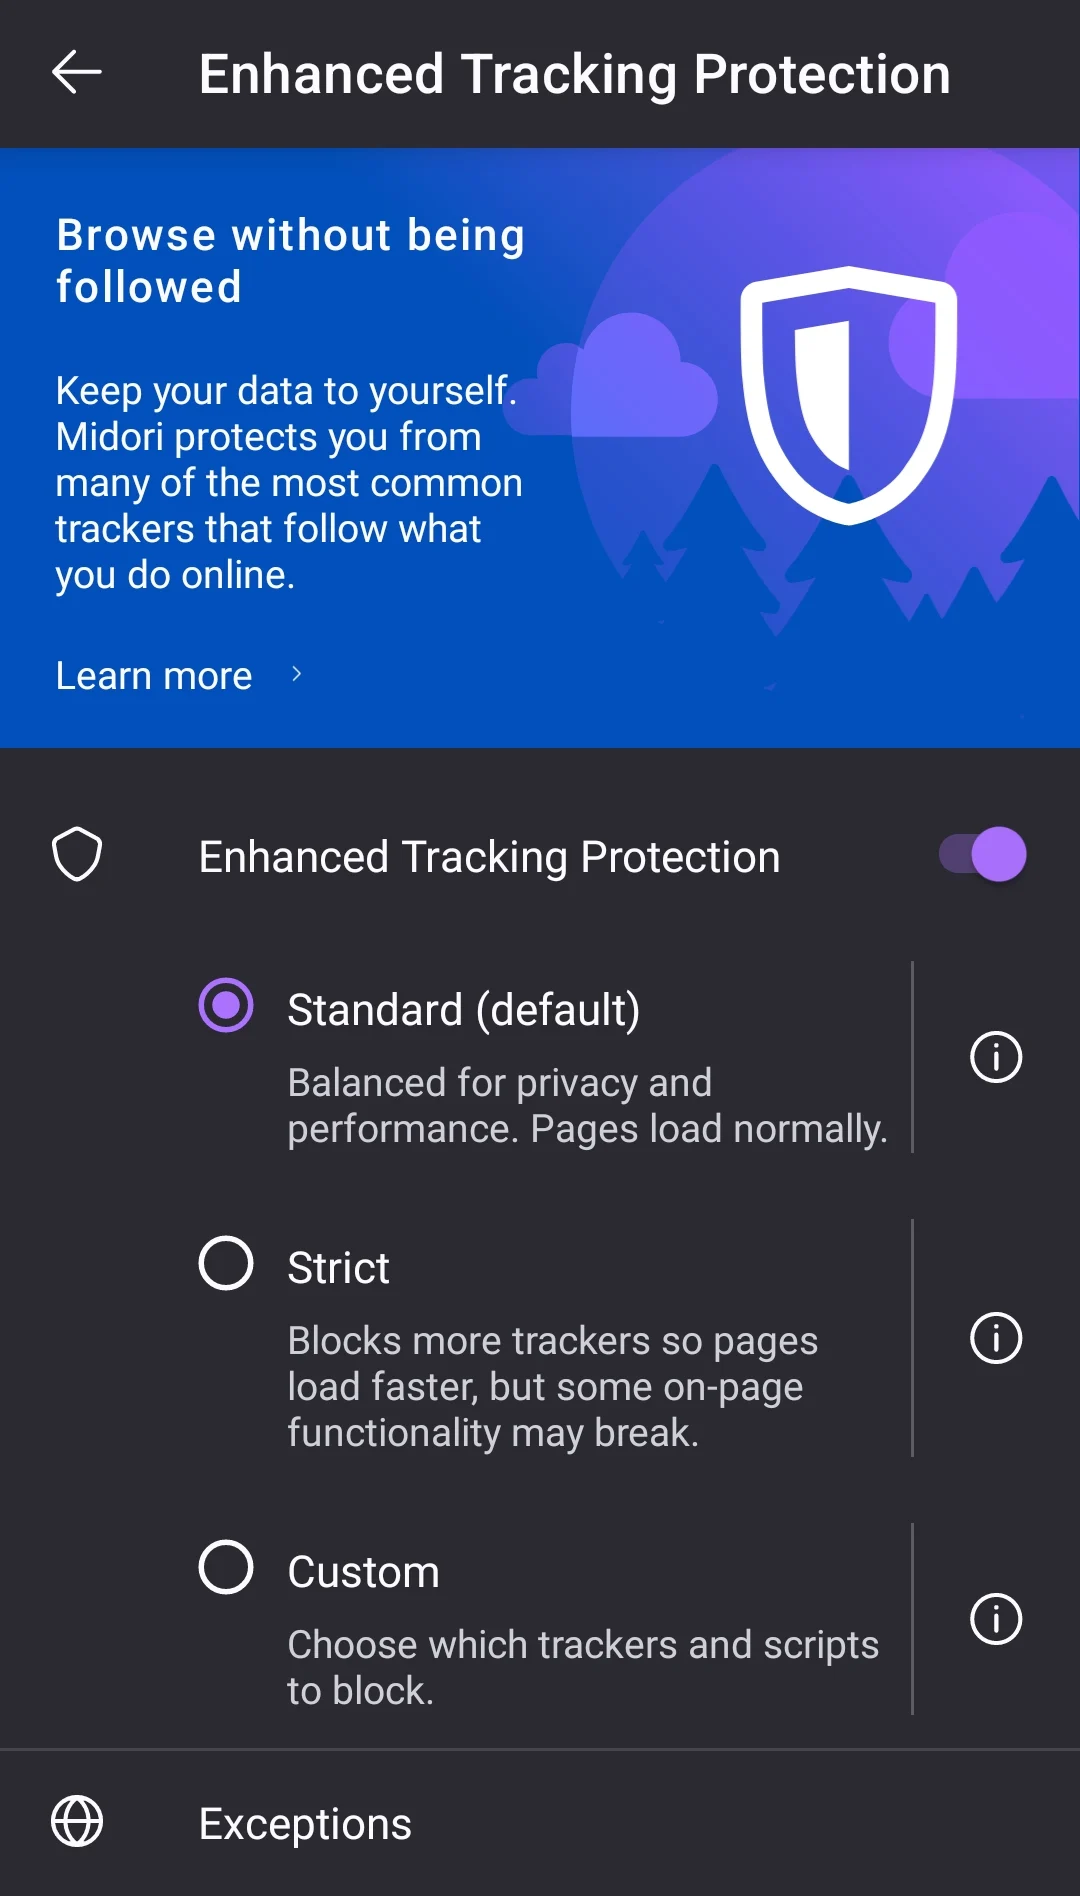 Midori Tracking Protection